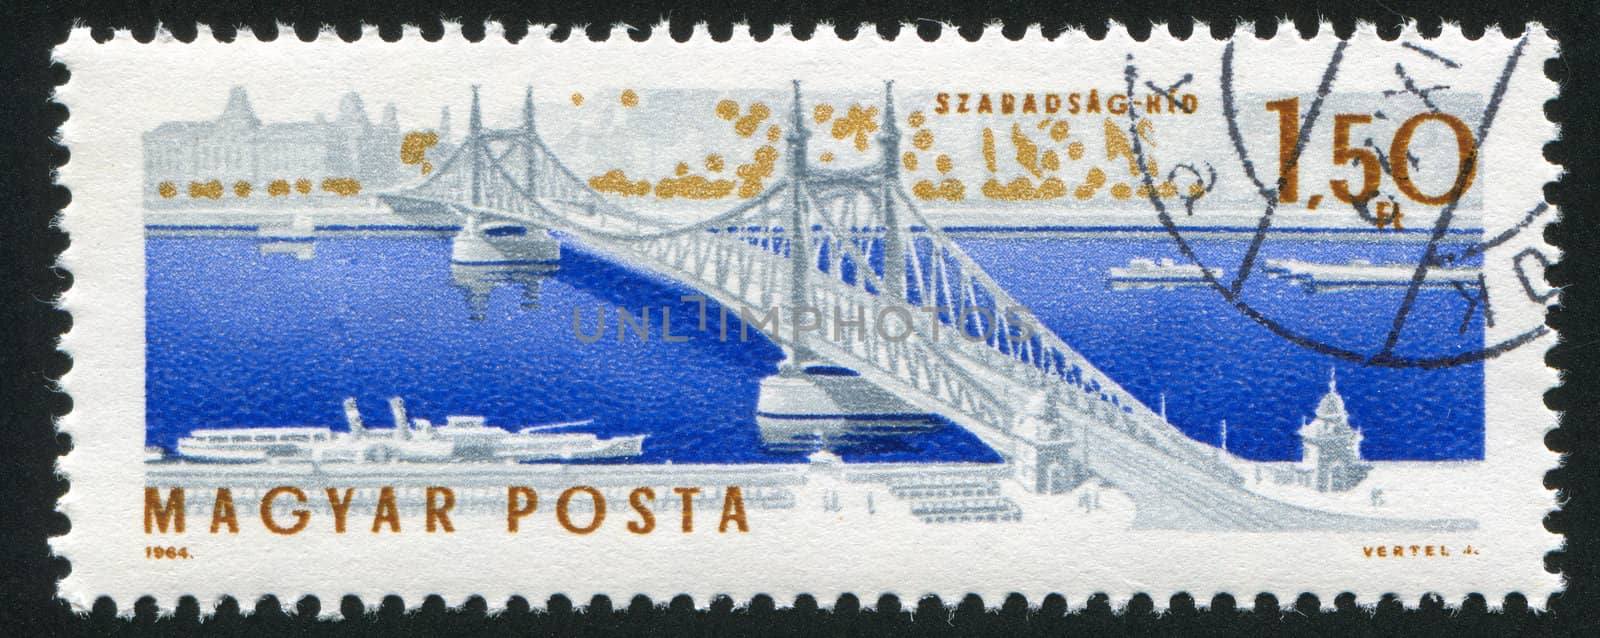 Elisabeth bridge in Budapest by rook